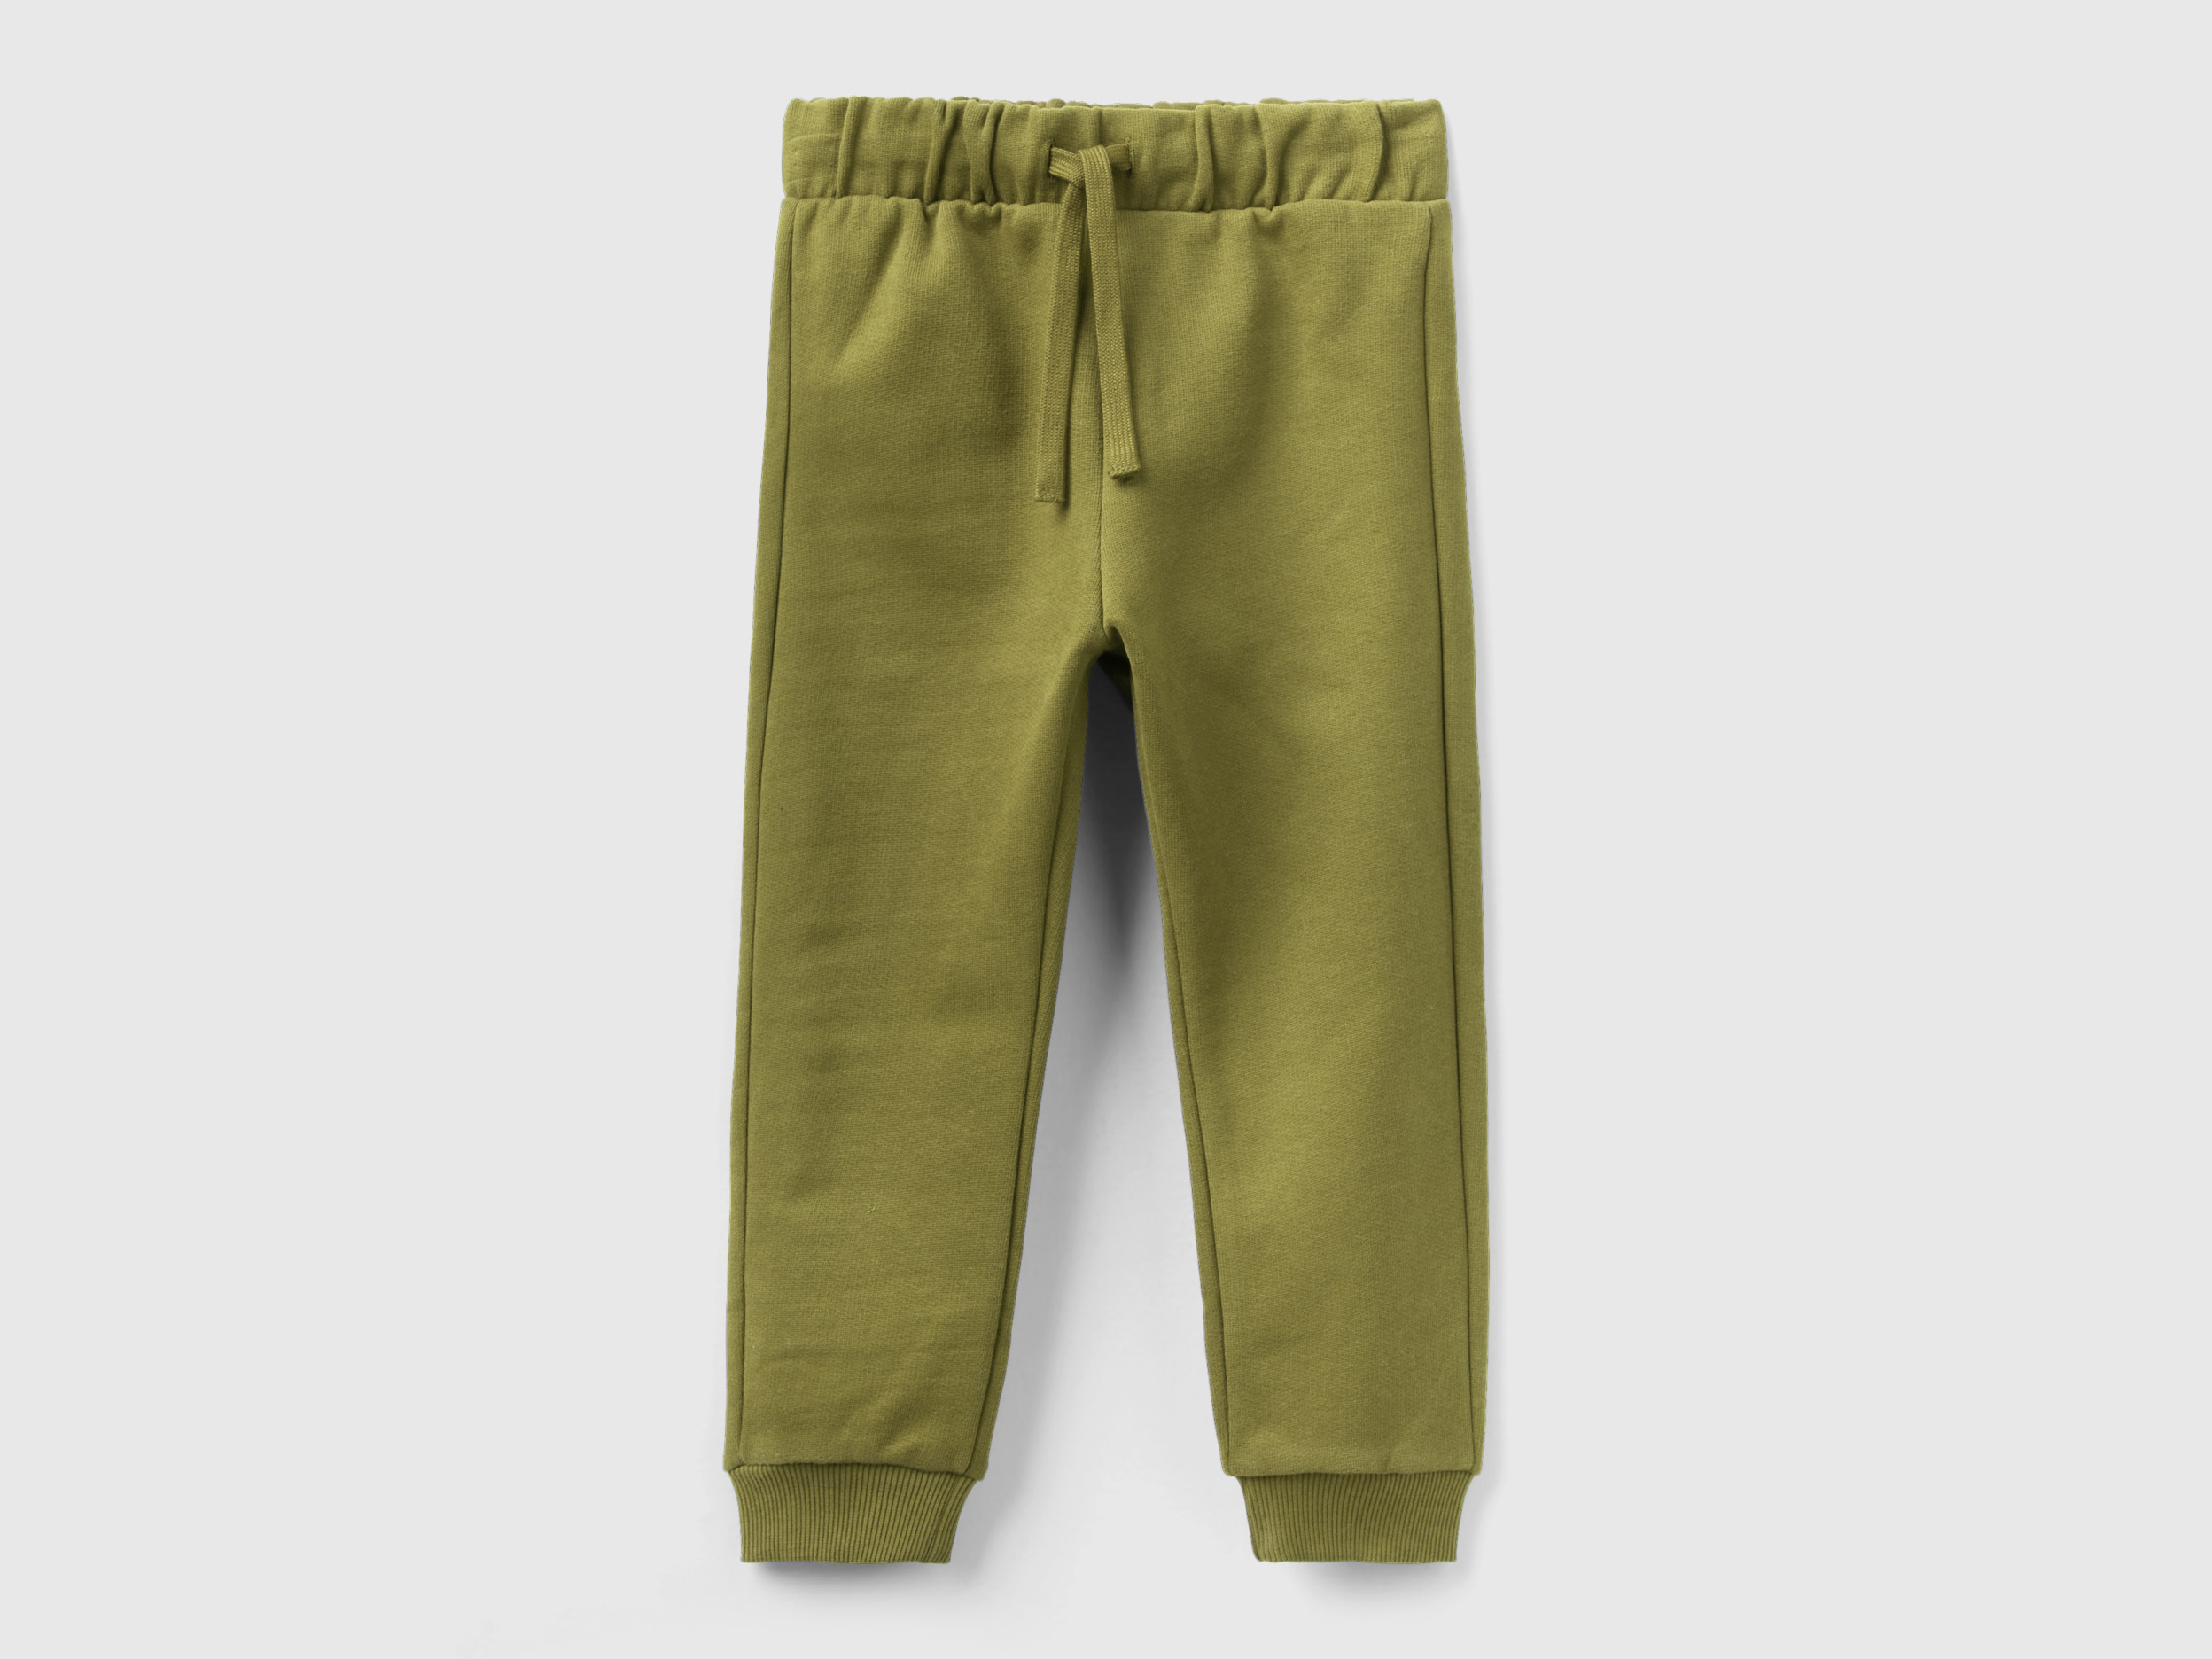 Benetton, Warm Sweat Joggers, size 18-24, Military Green, Kids